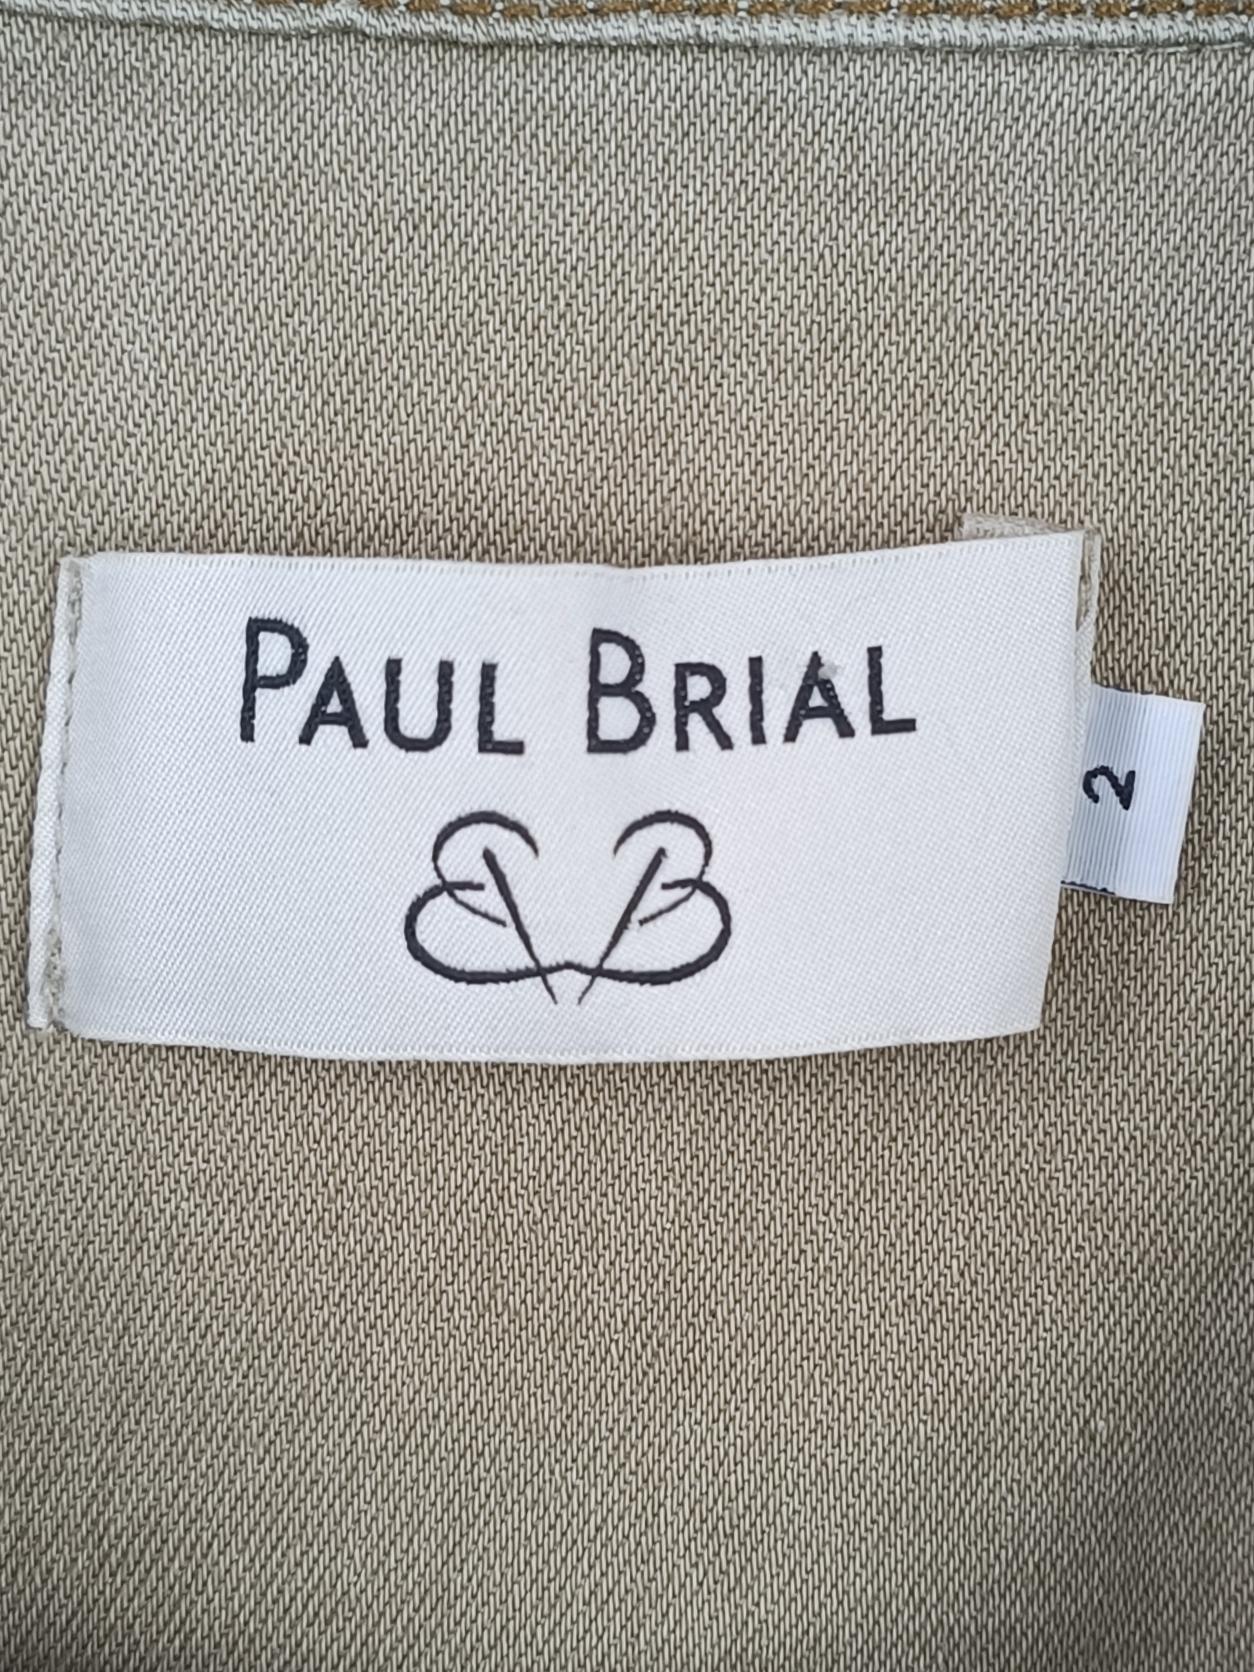 Veste Paul Brial - Taille 36